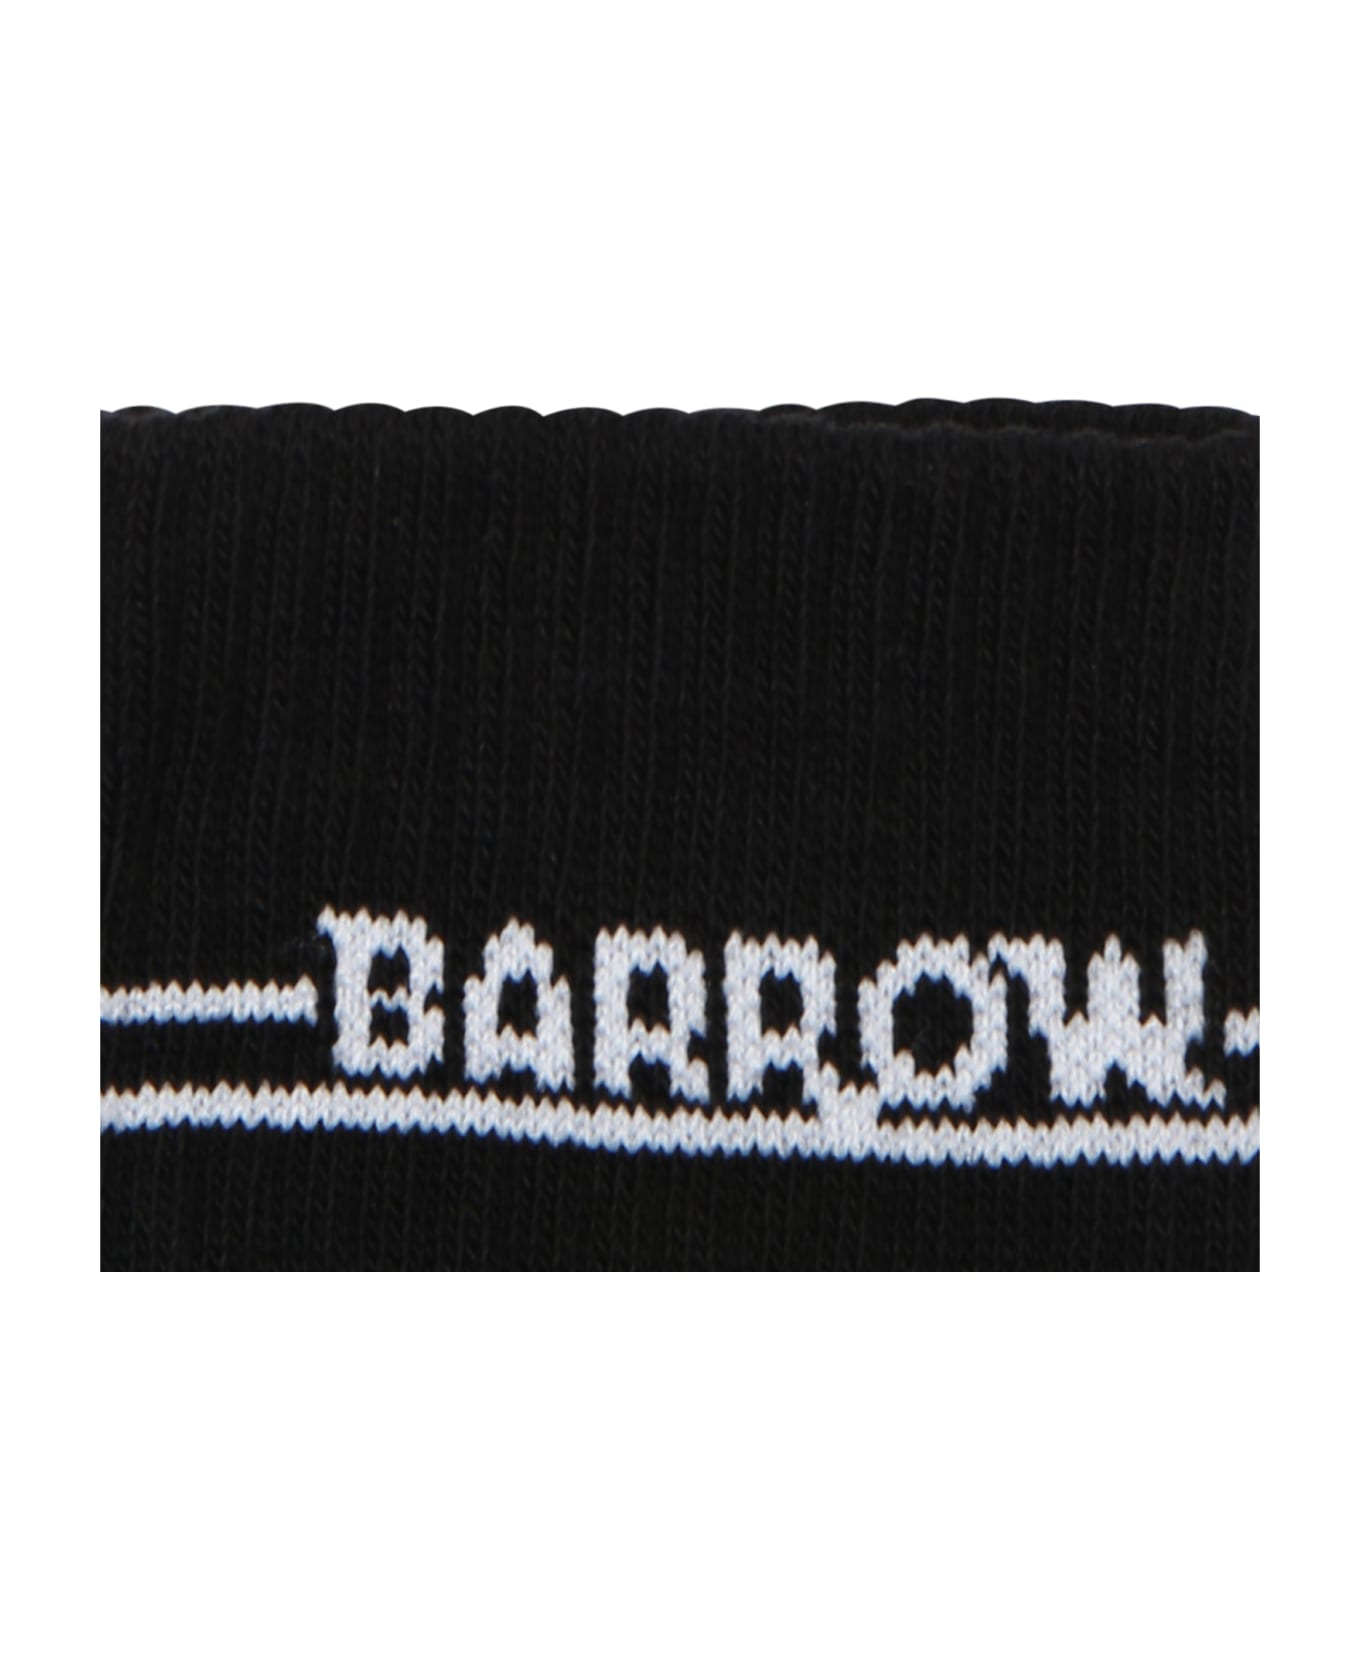 Barrow Black Socks For Kids With Smiley - Nero/Black